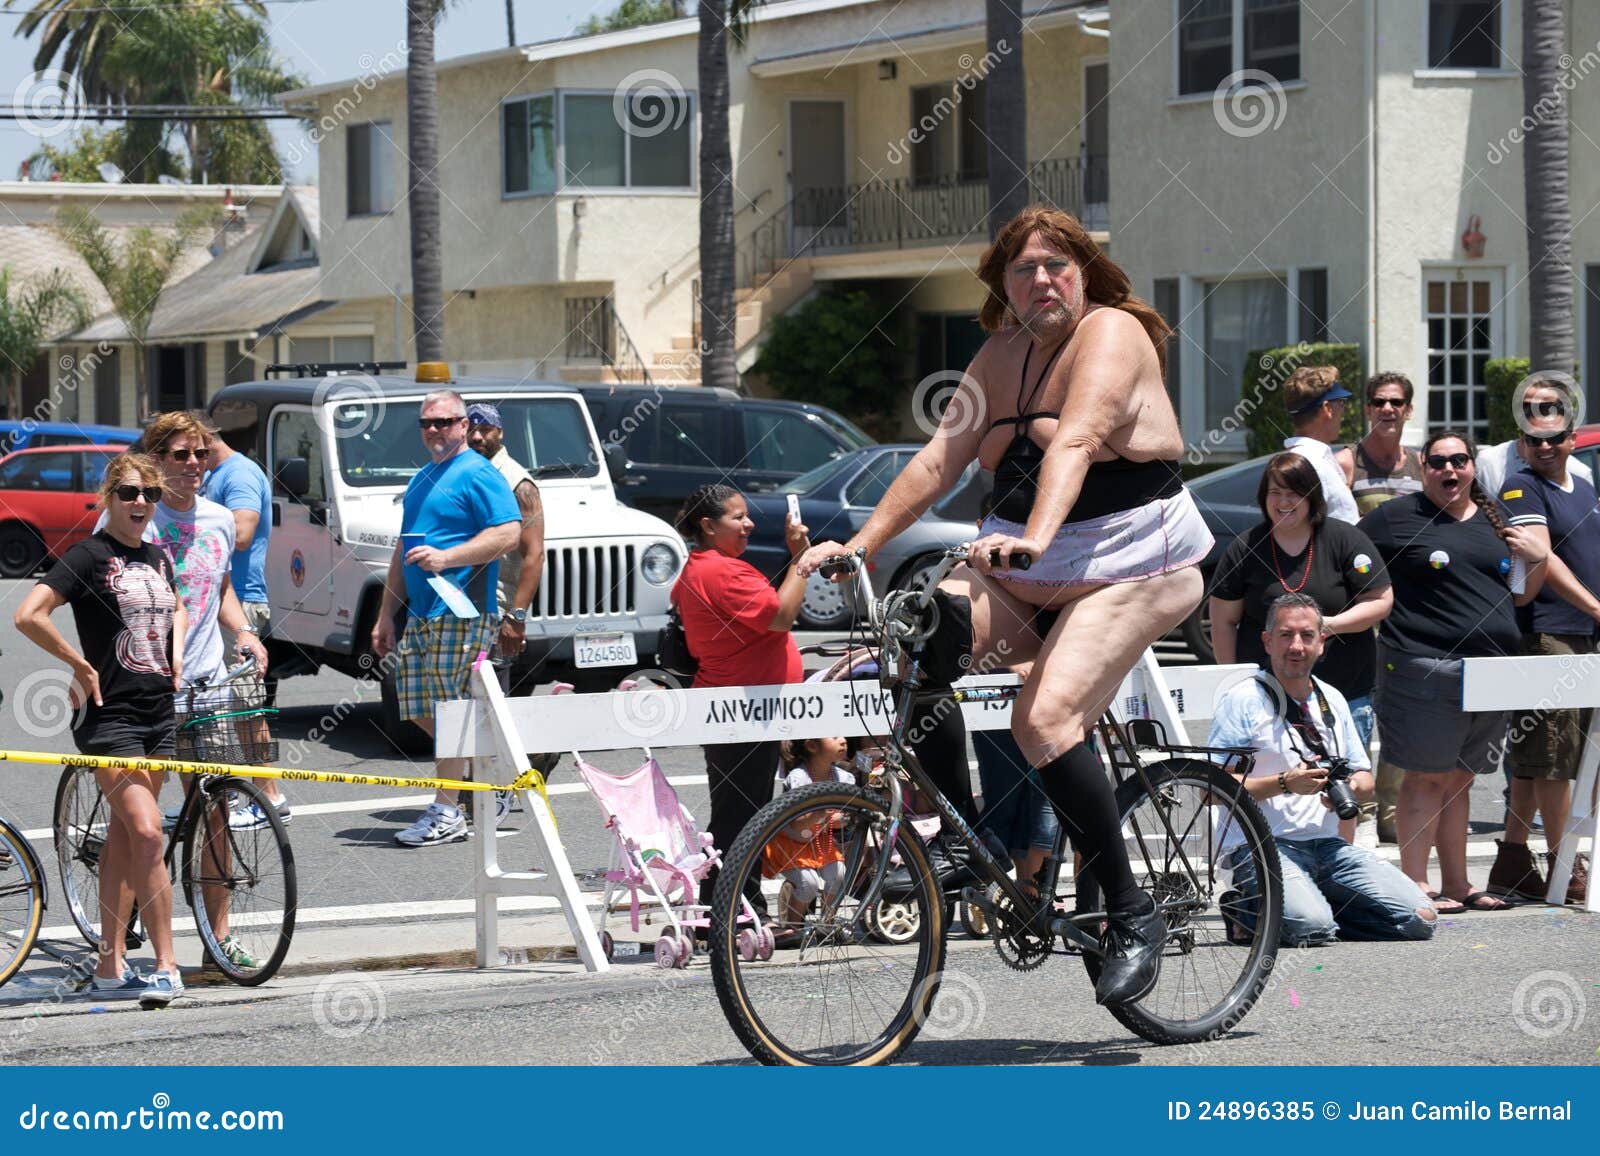 Long Beach Lesbian and Gay Pride Parade Editorial Image